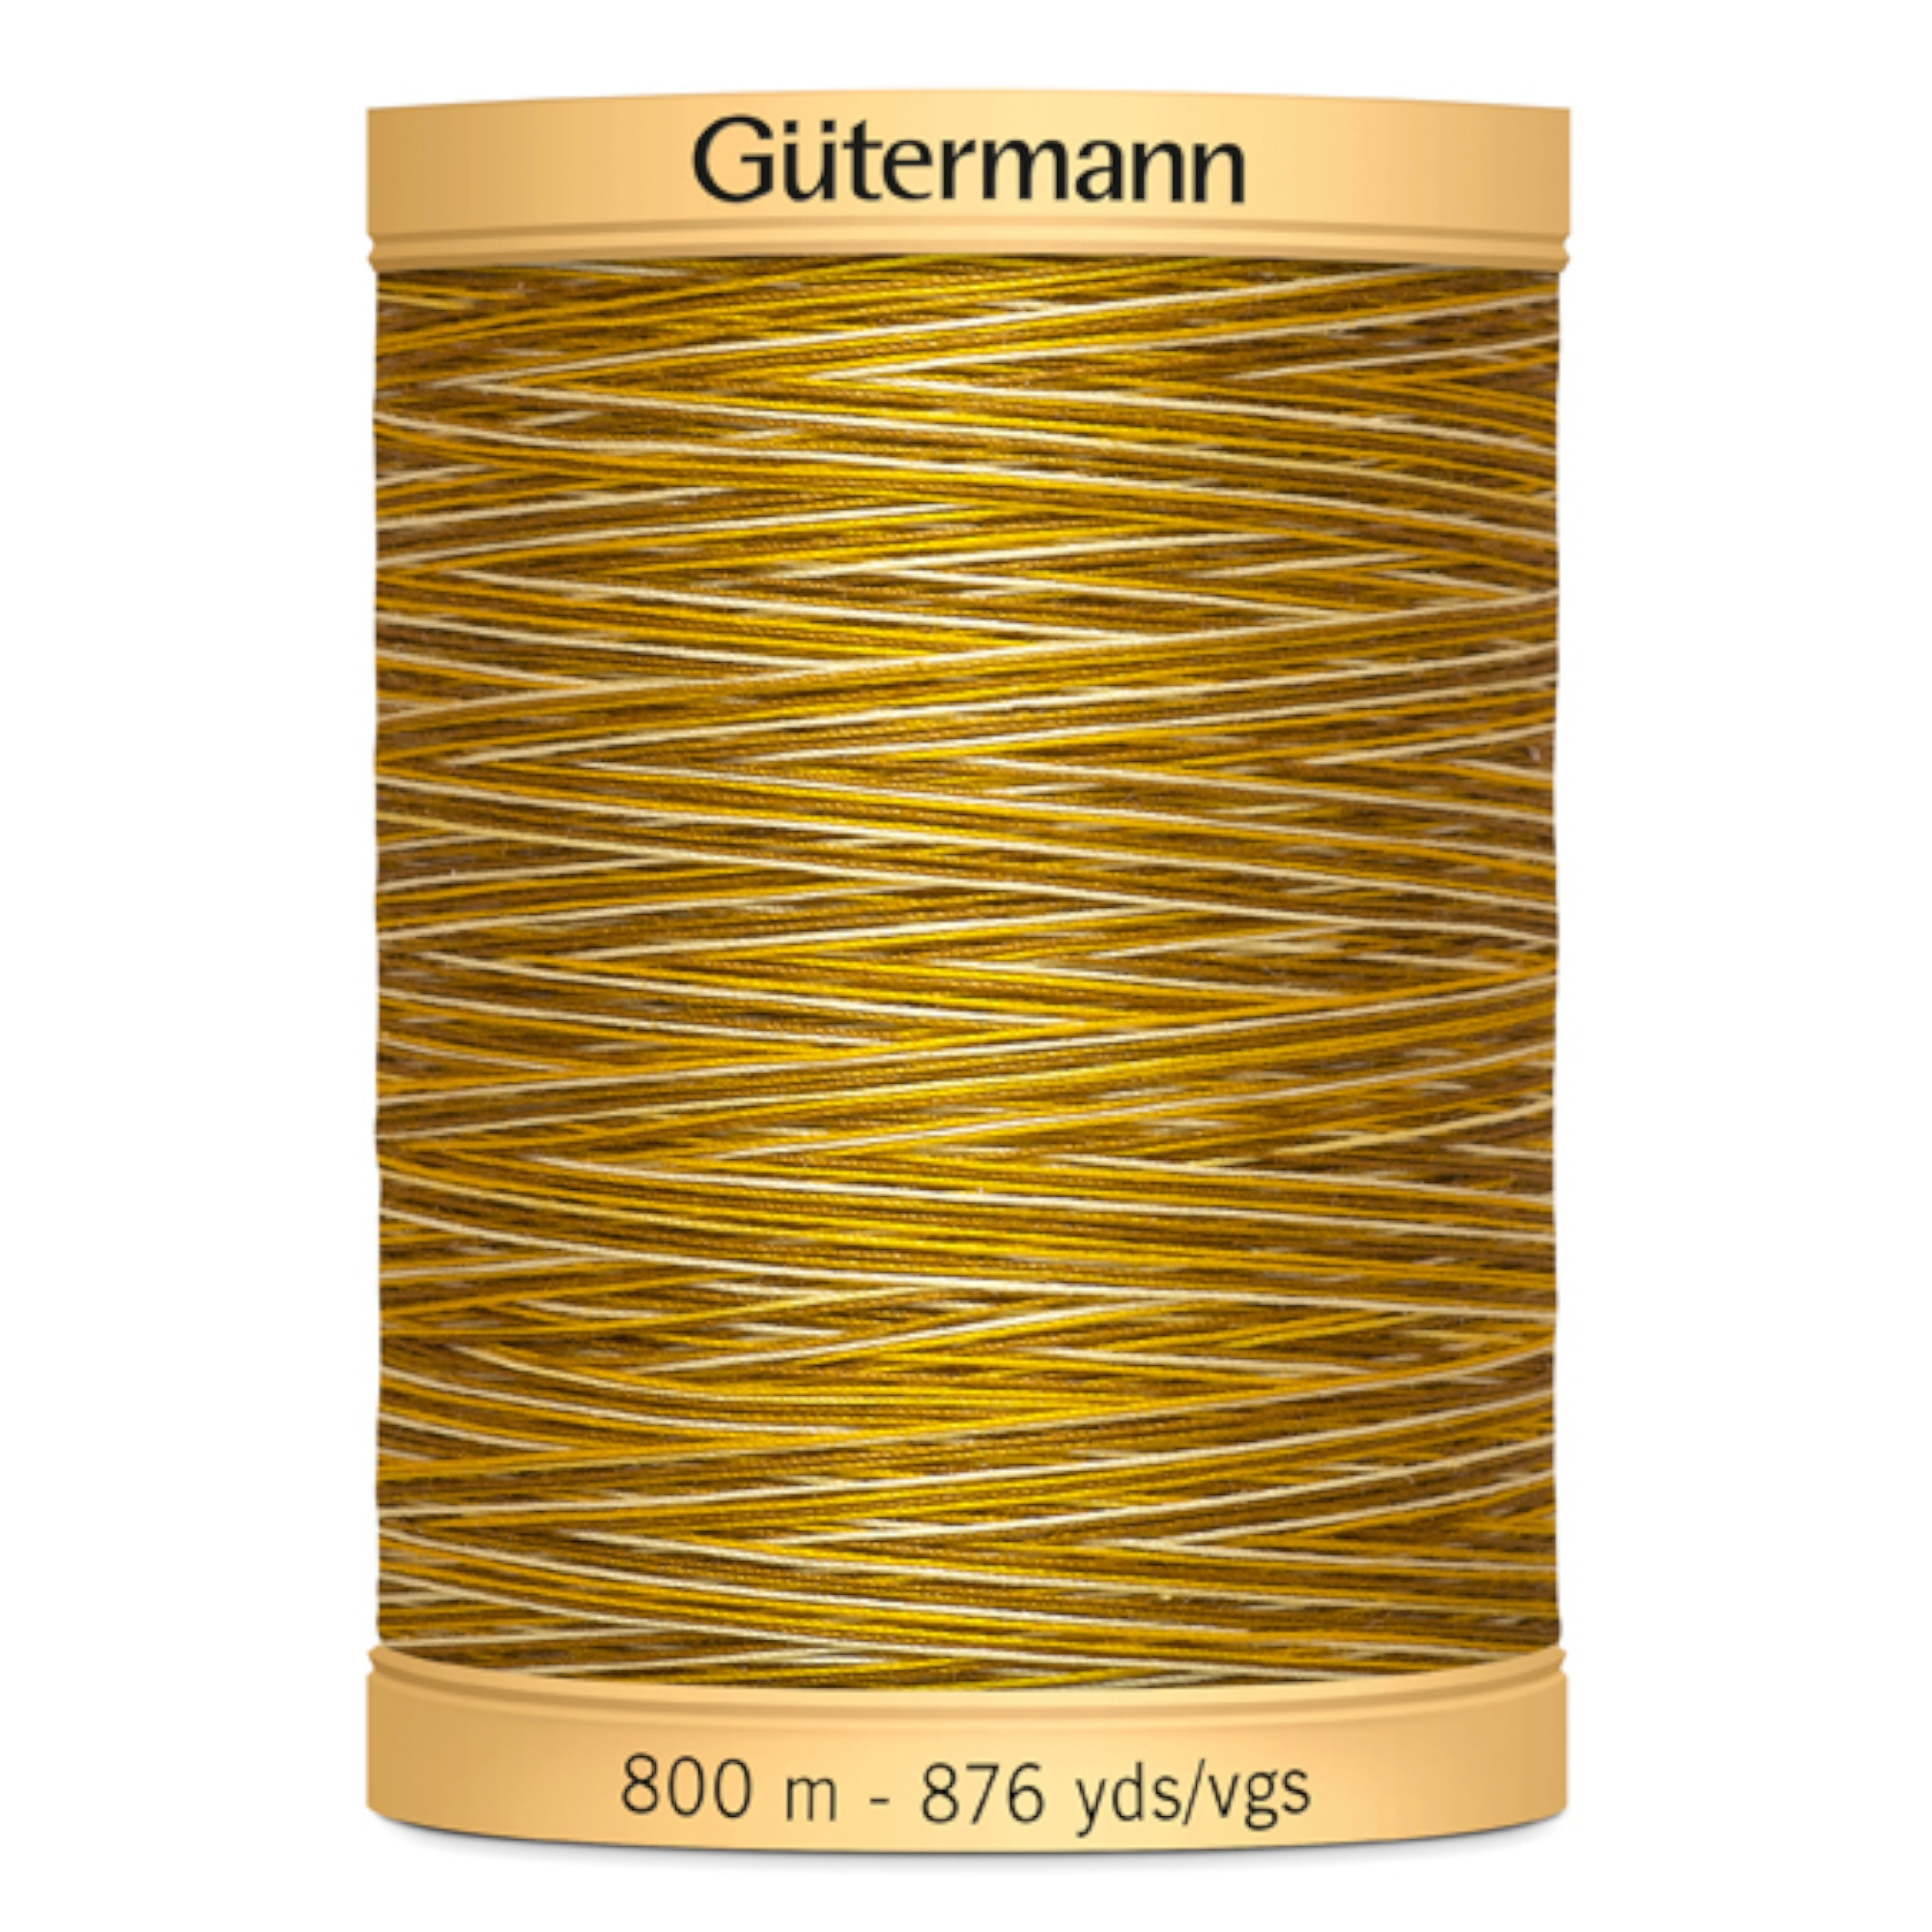 Gütermann C NE 50 Baumwollgarn in Altgold, 800 Meter